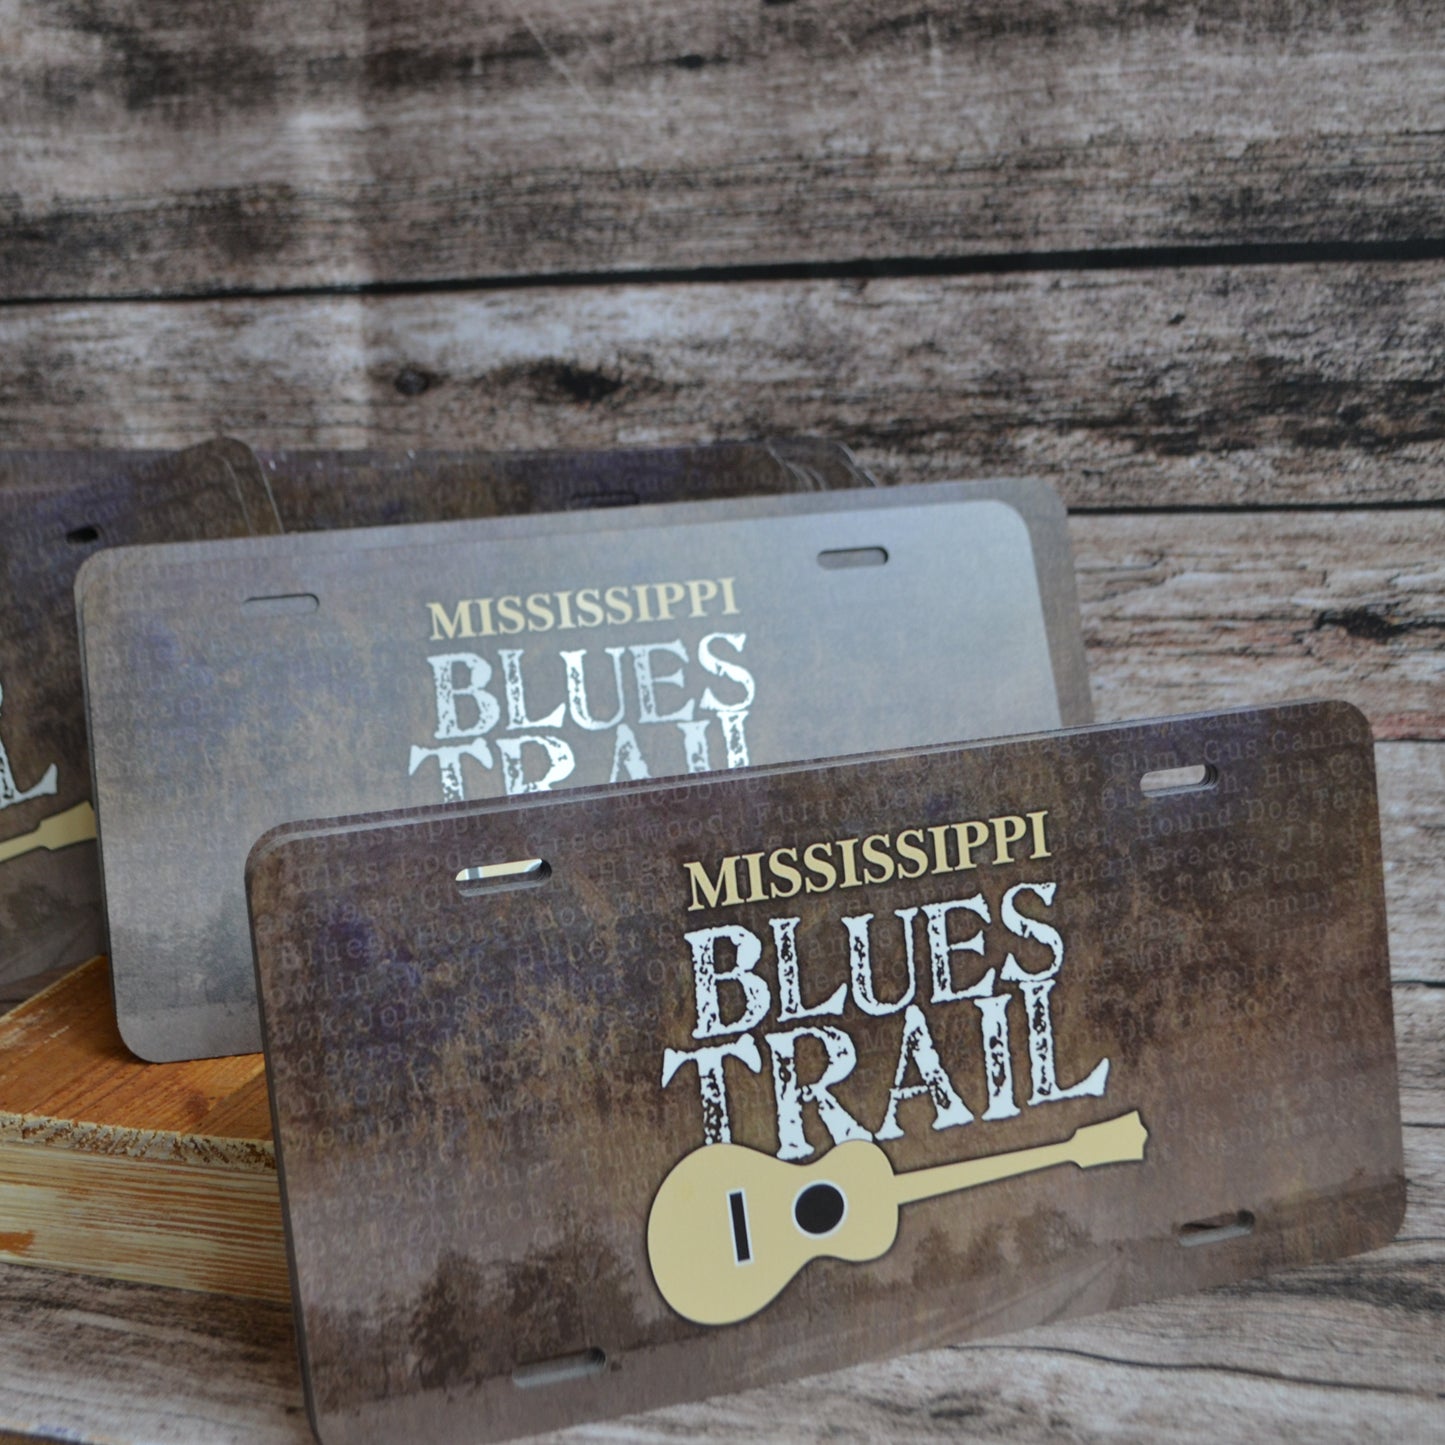 Mississippi Blues Trail License Plates